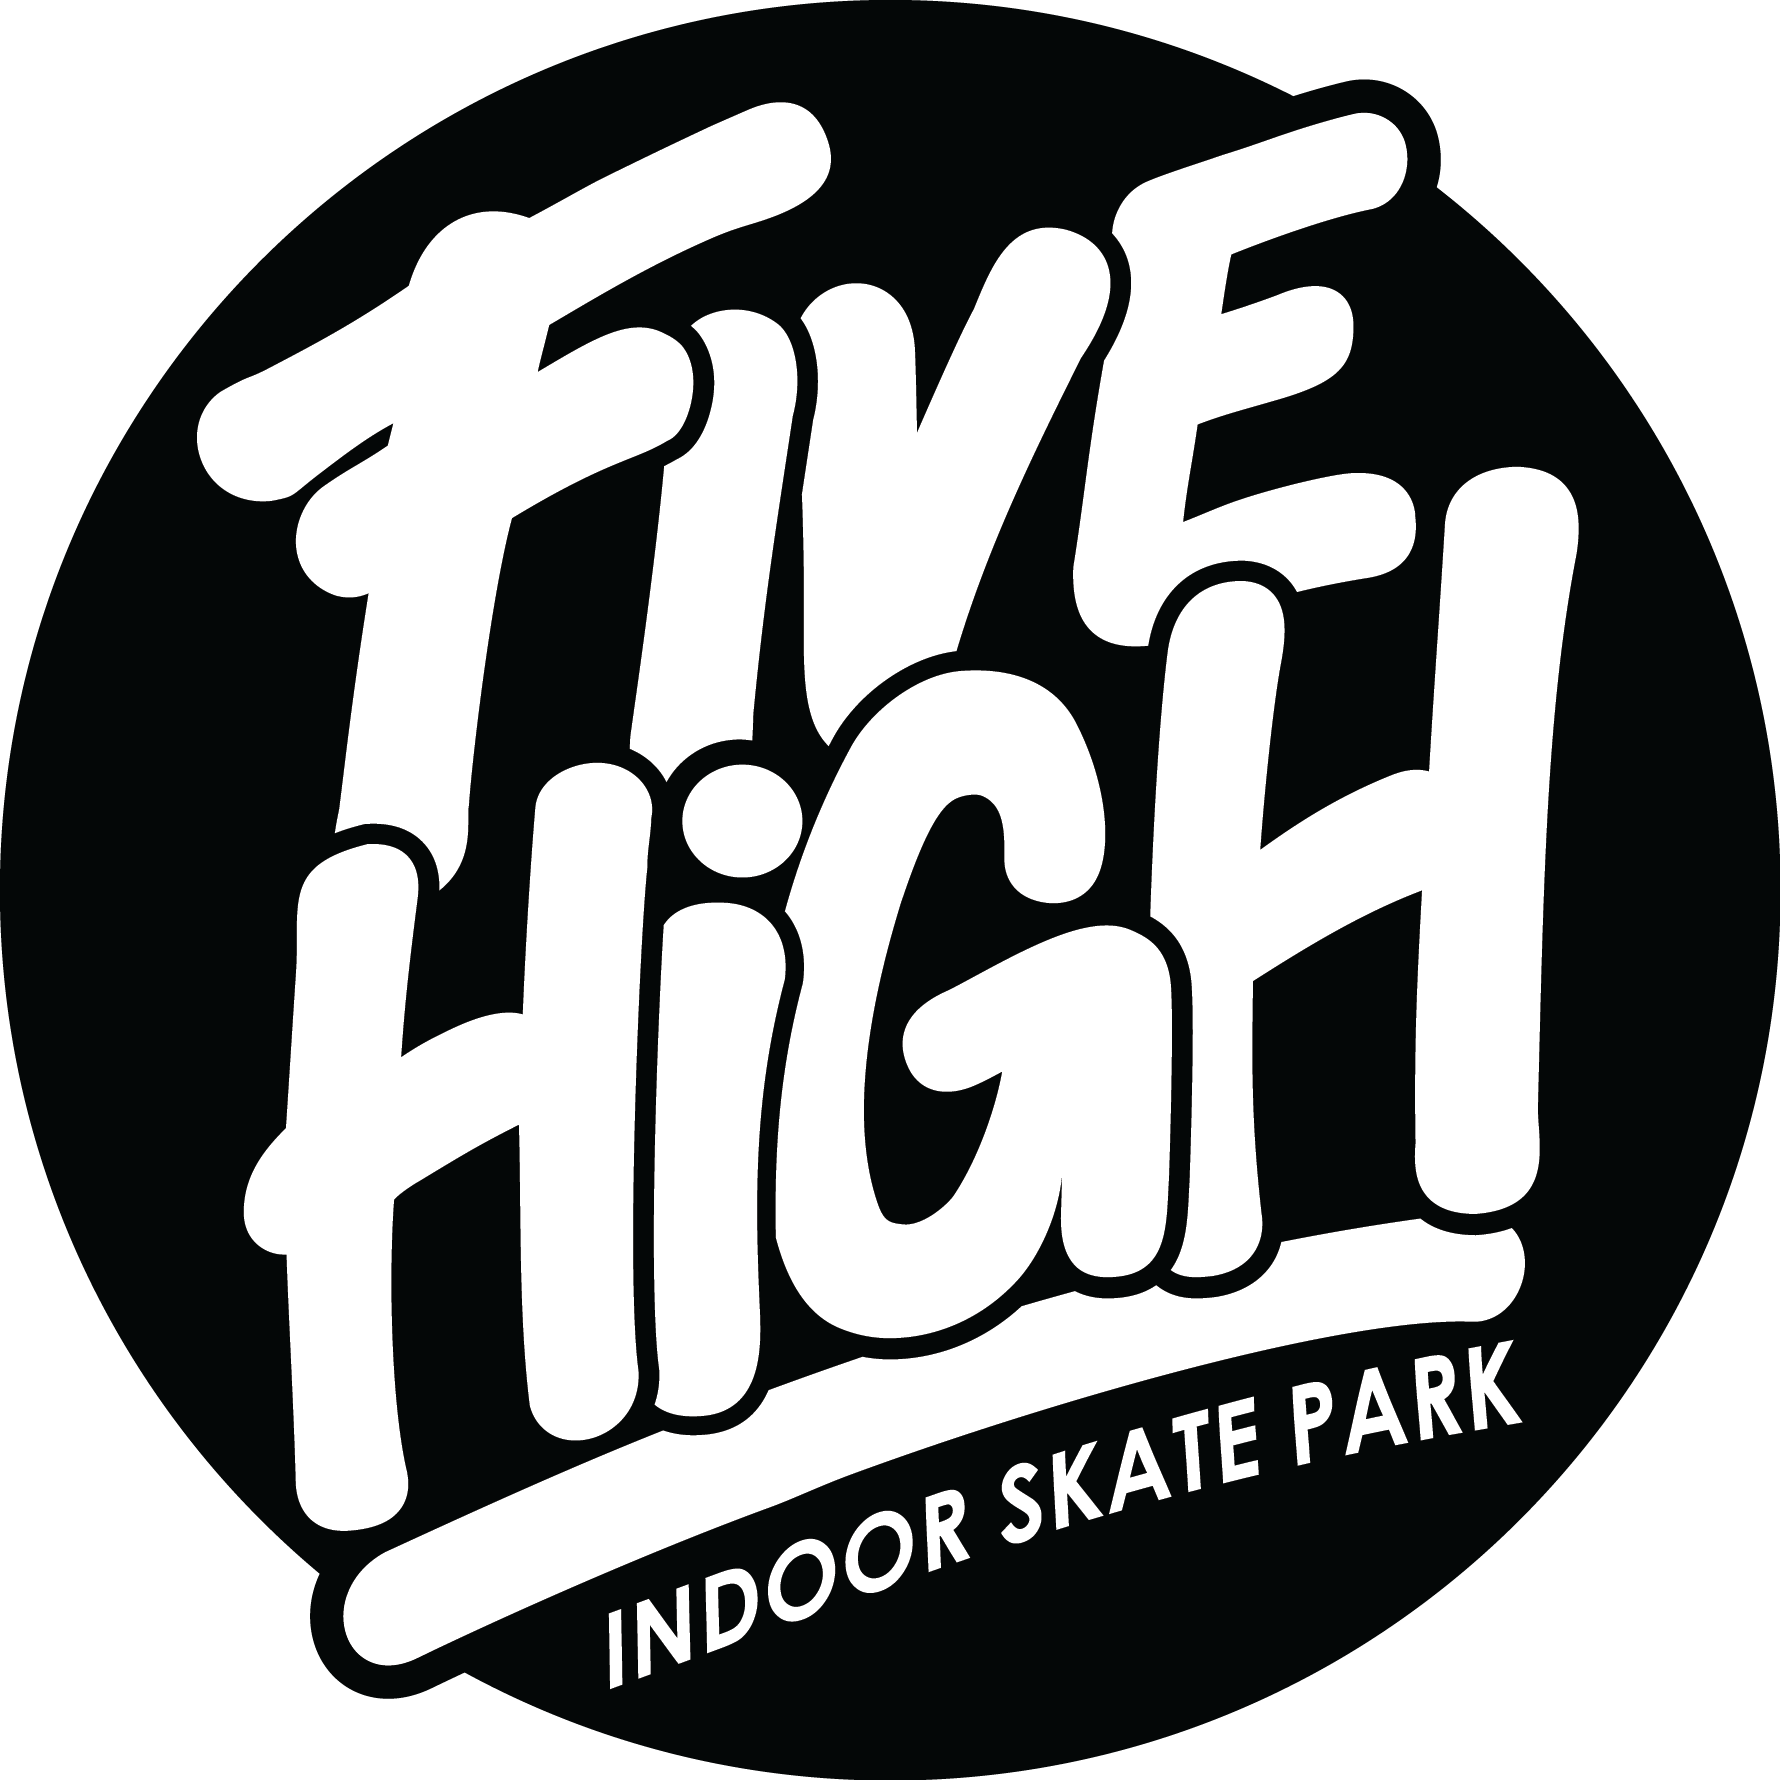 Skatepark Logo - Five High skatepark